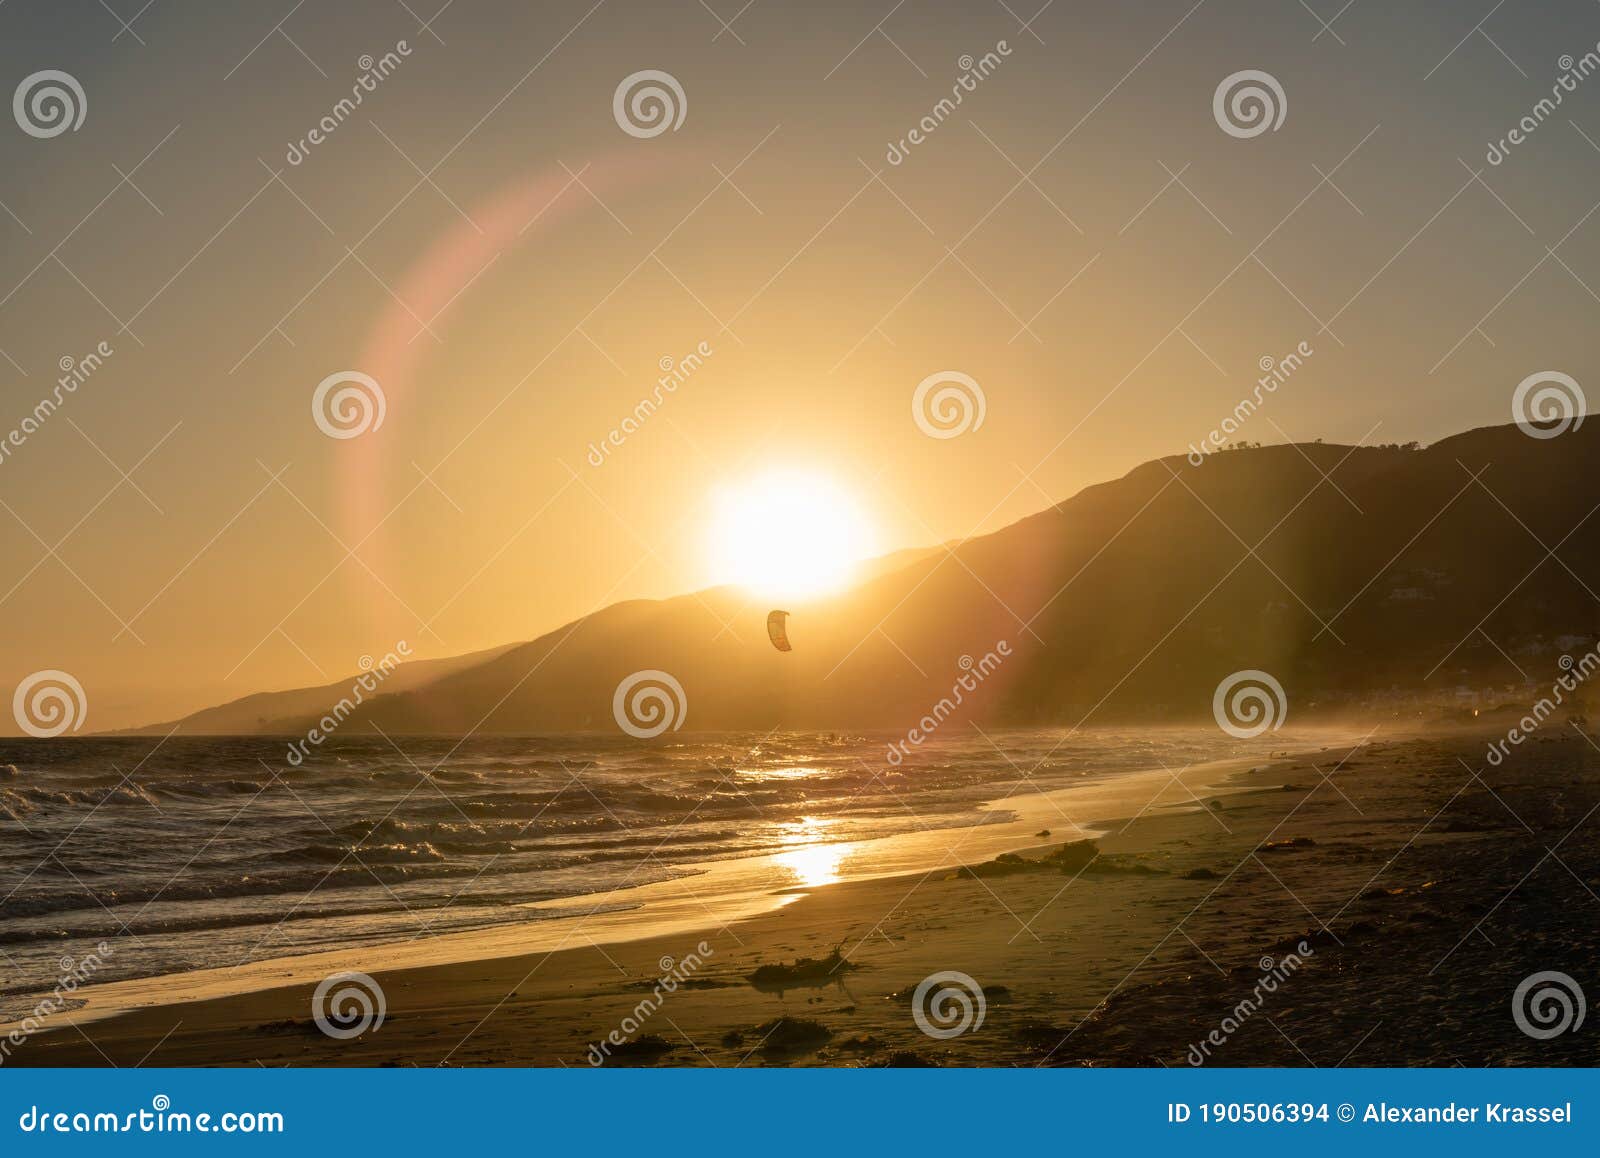 kite surfing at sunset at zuma beach, malibu, california